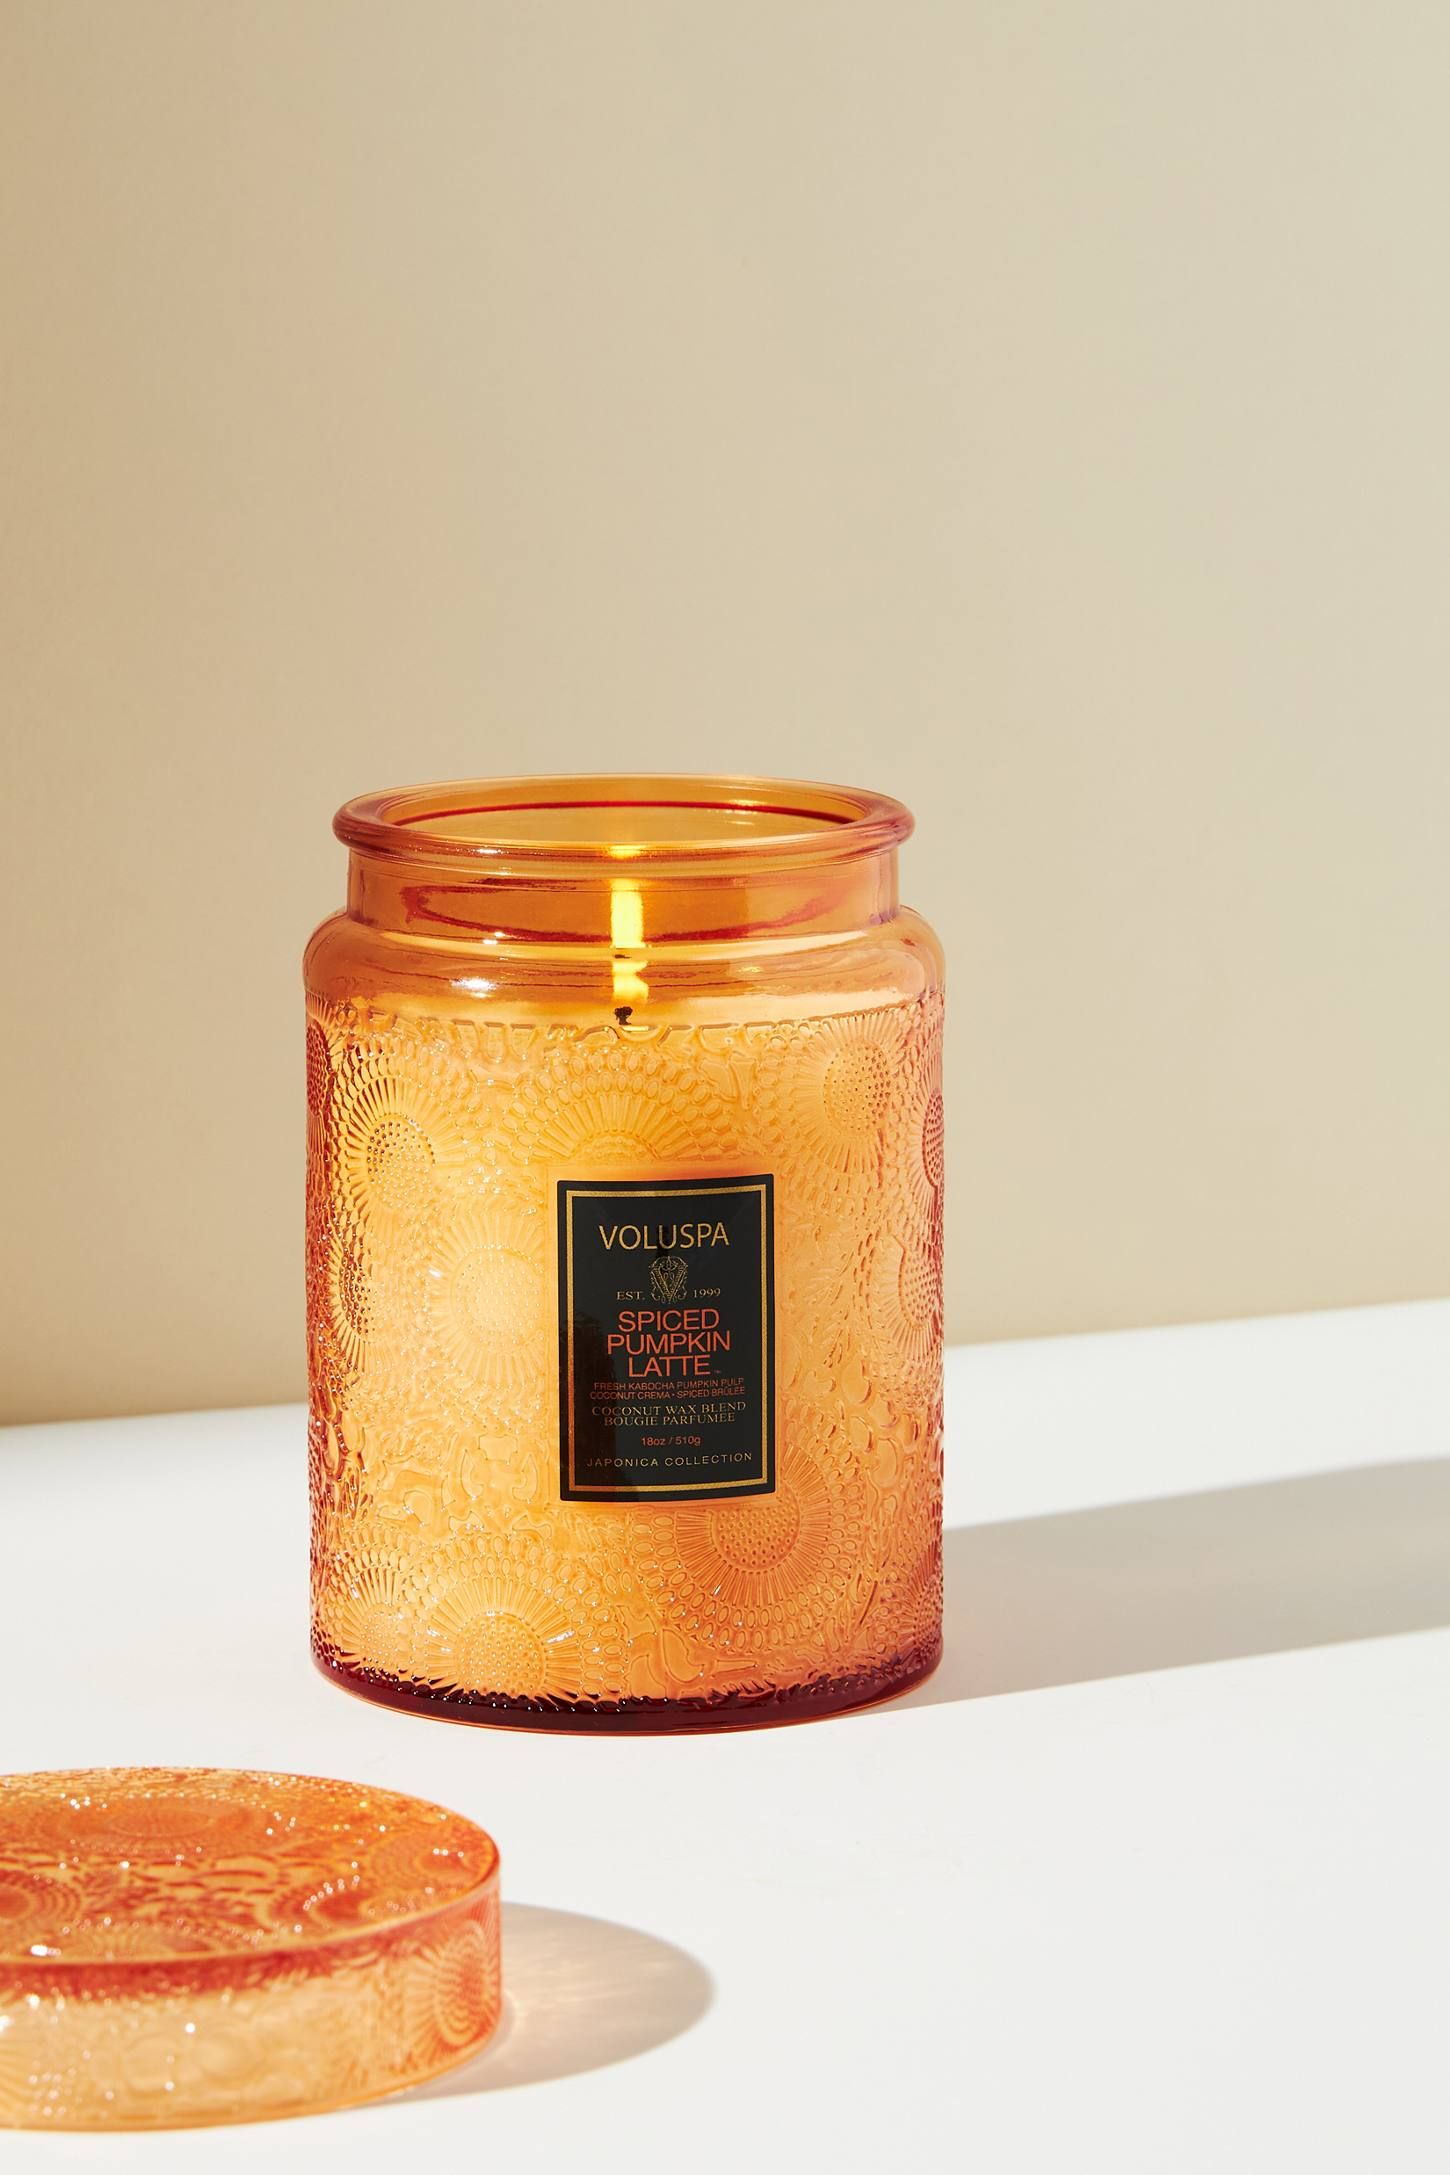 Fall Scented Amber Jar Candle Pumpkin Spice Latte Wooden Wick Wax Melts The Great Pumpkin